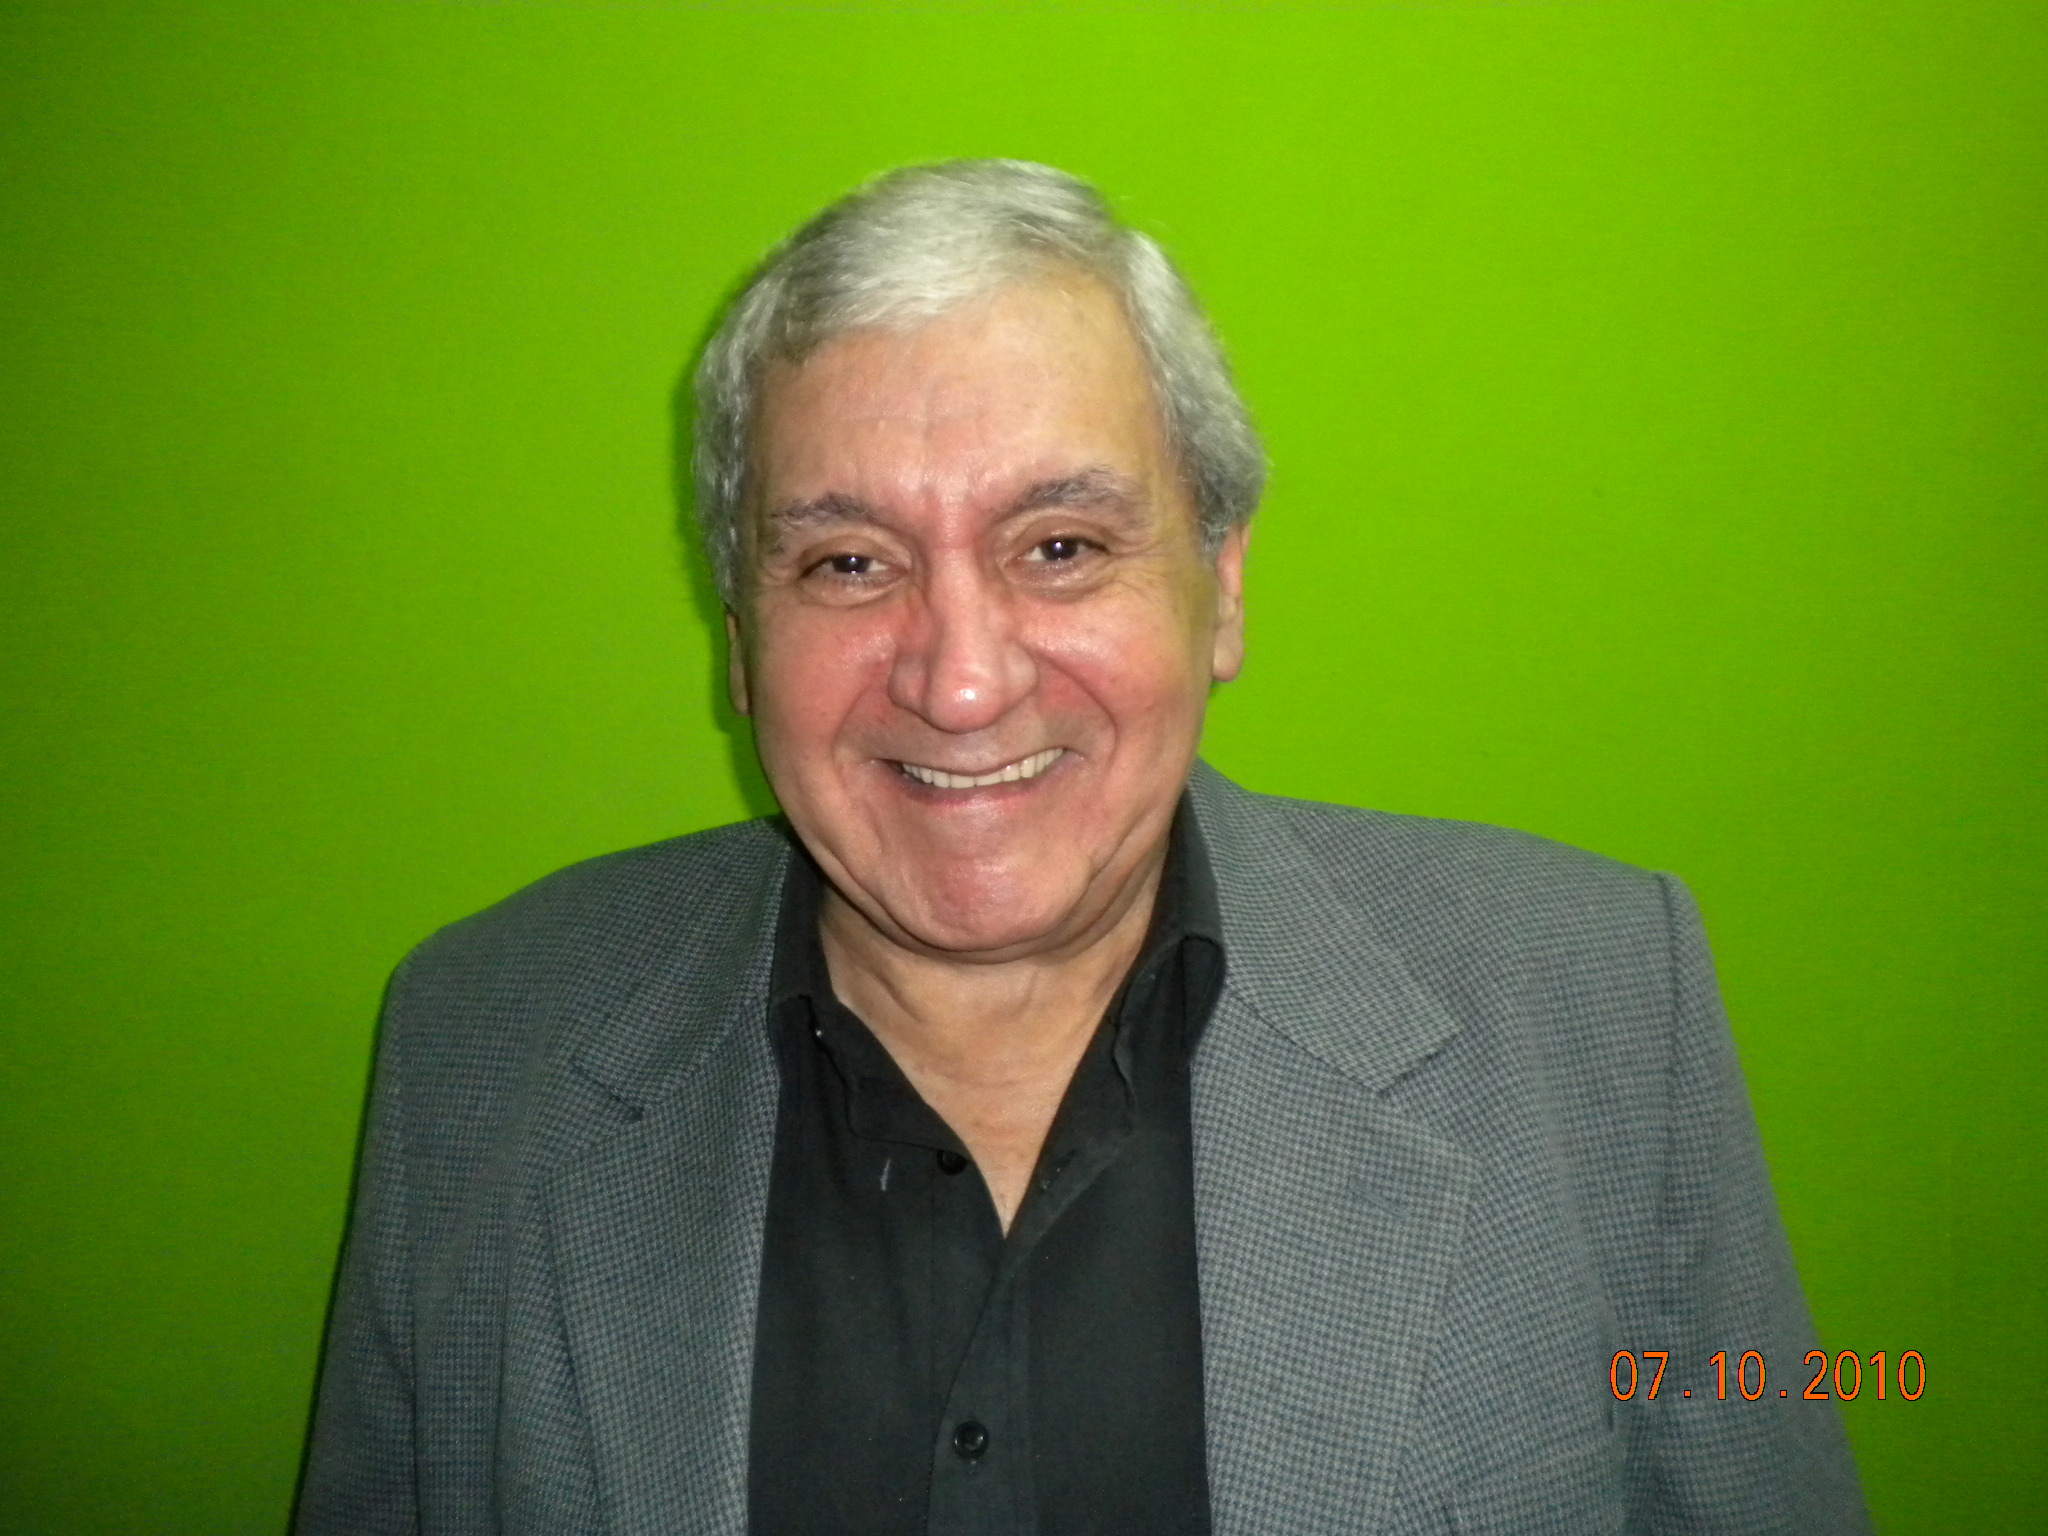 Roberto Peralta